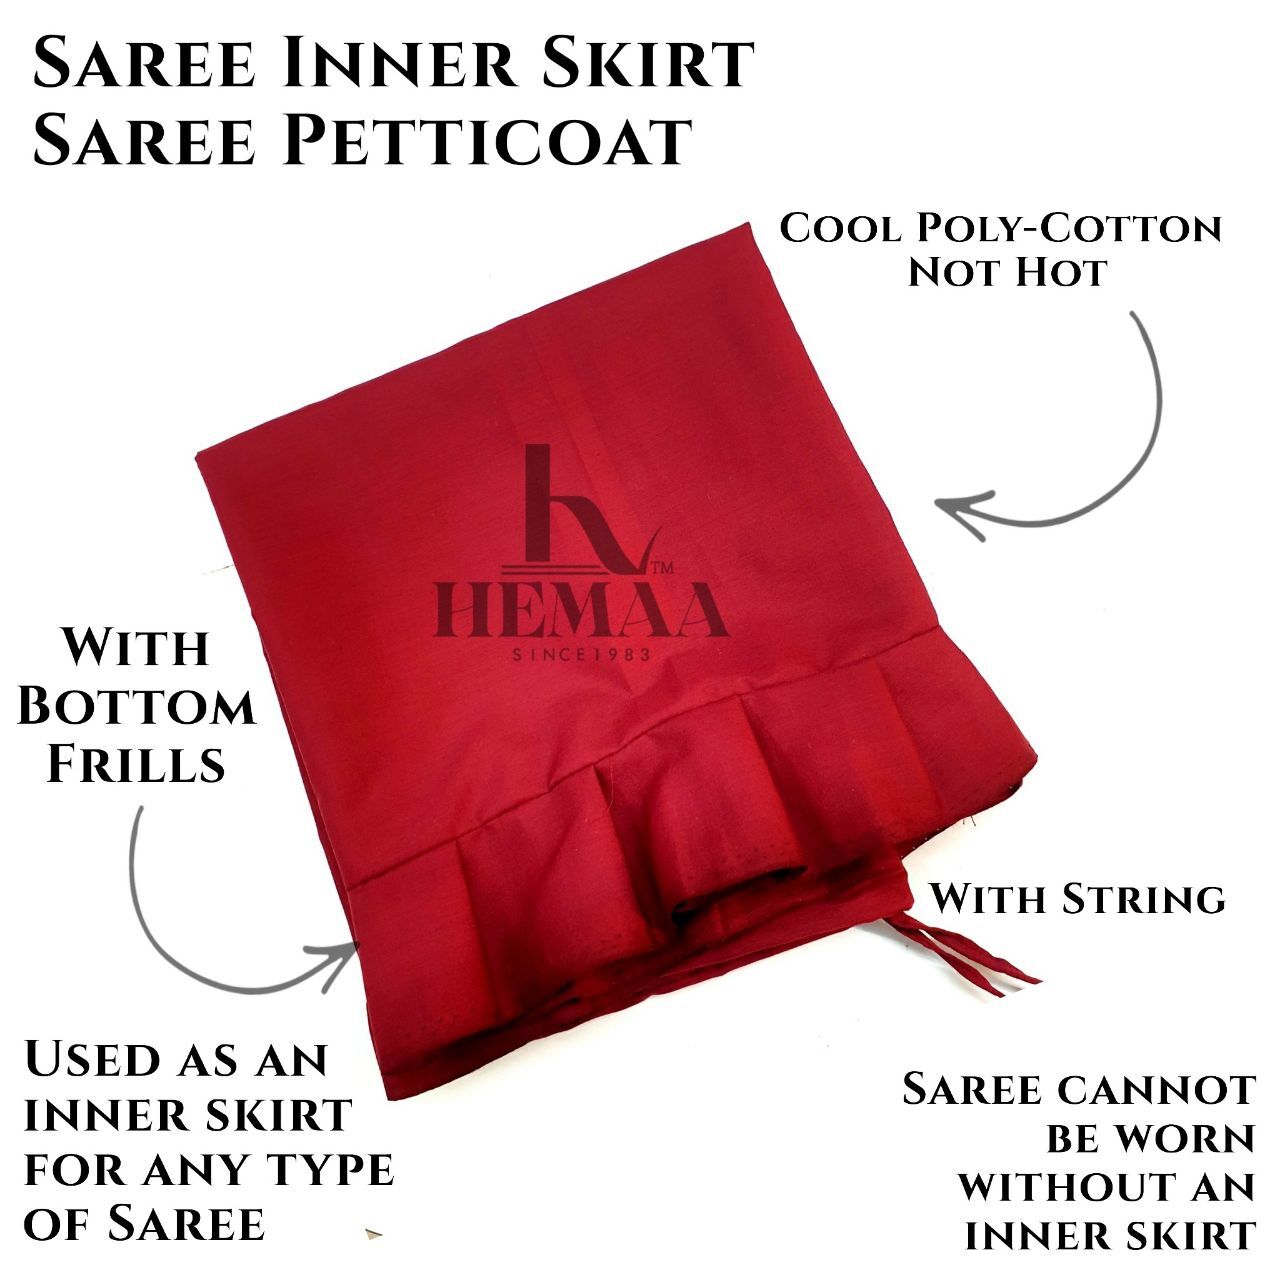 Can a saree shapewear hold heavy silk sarees? - Quora